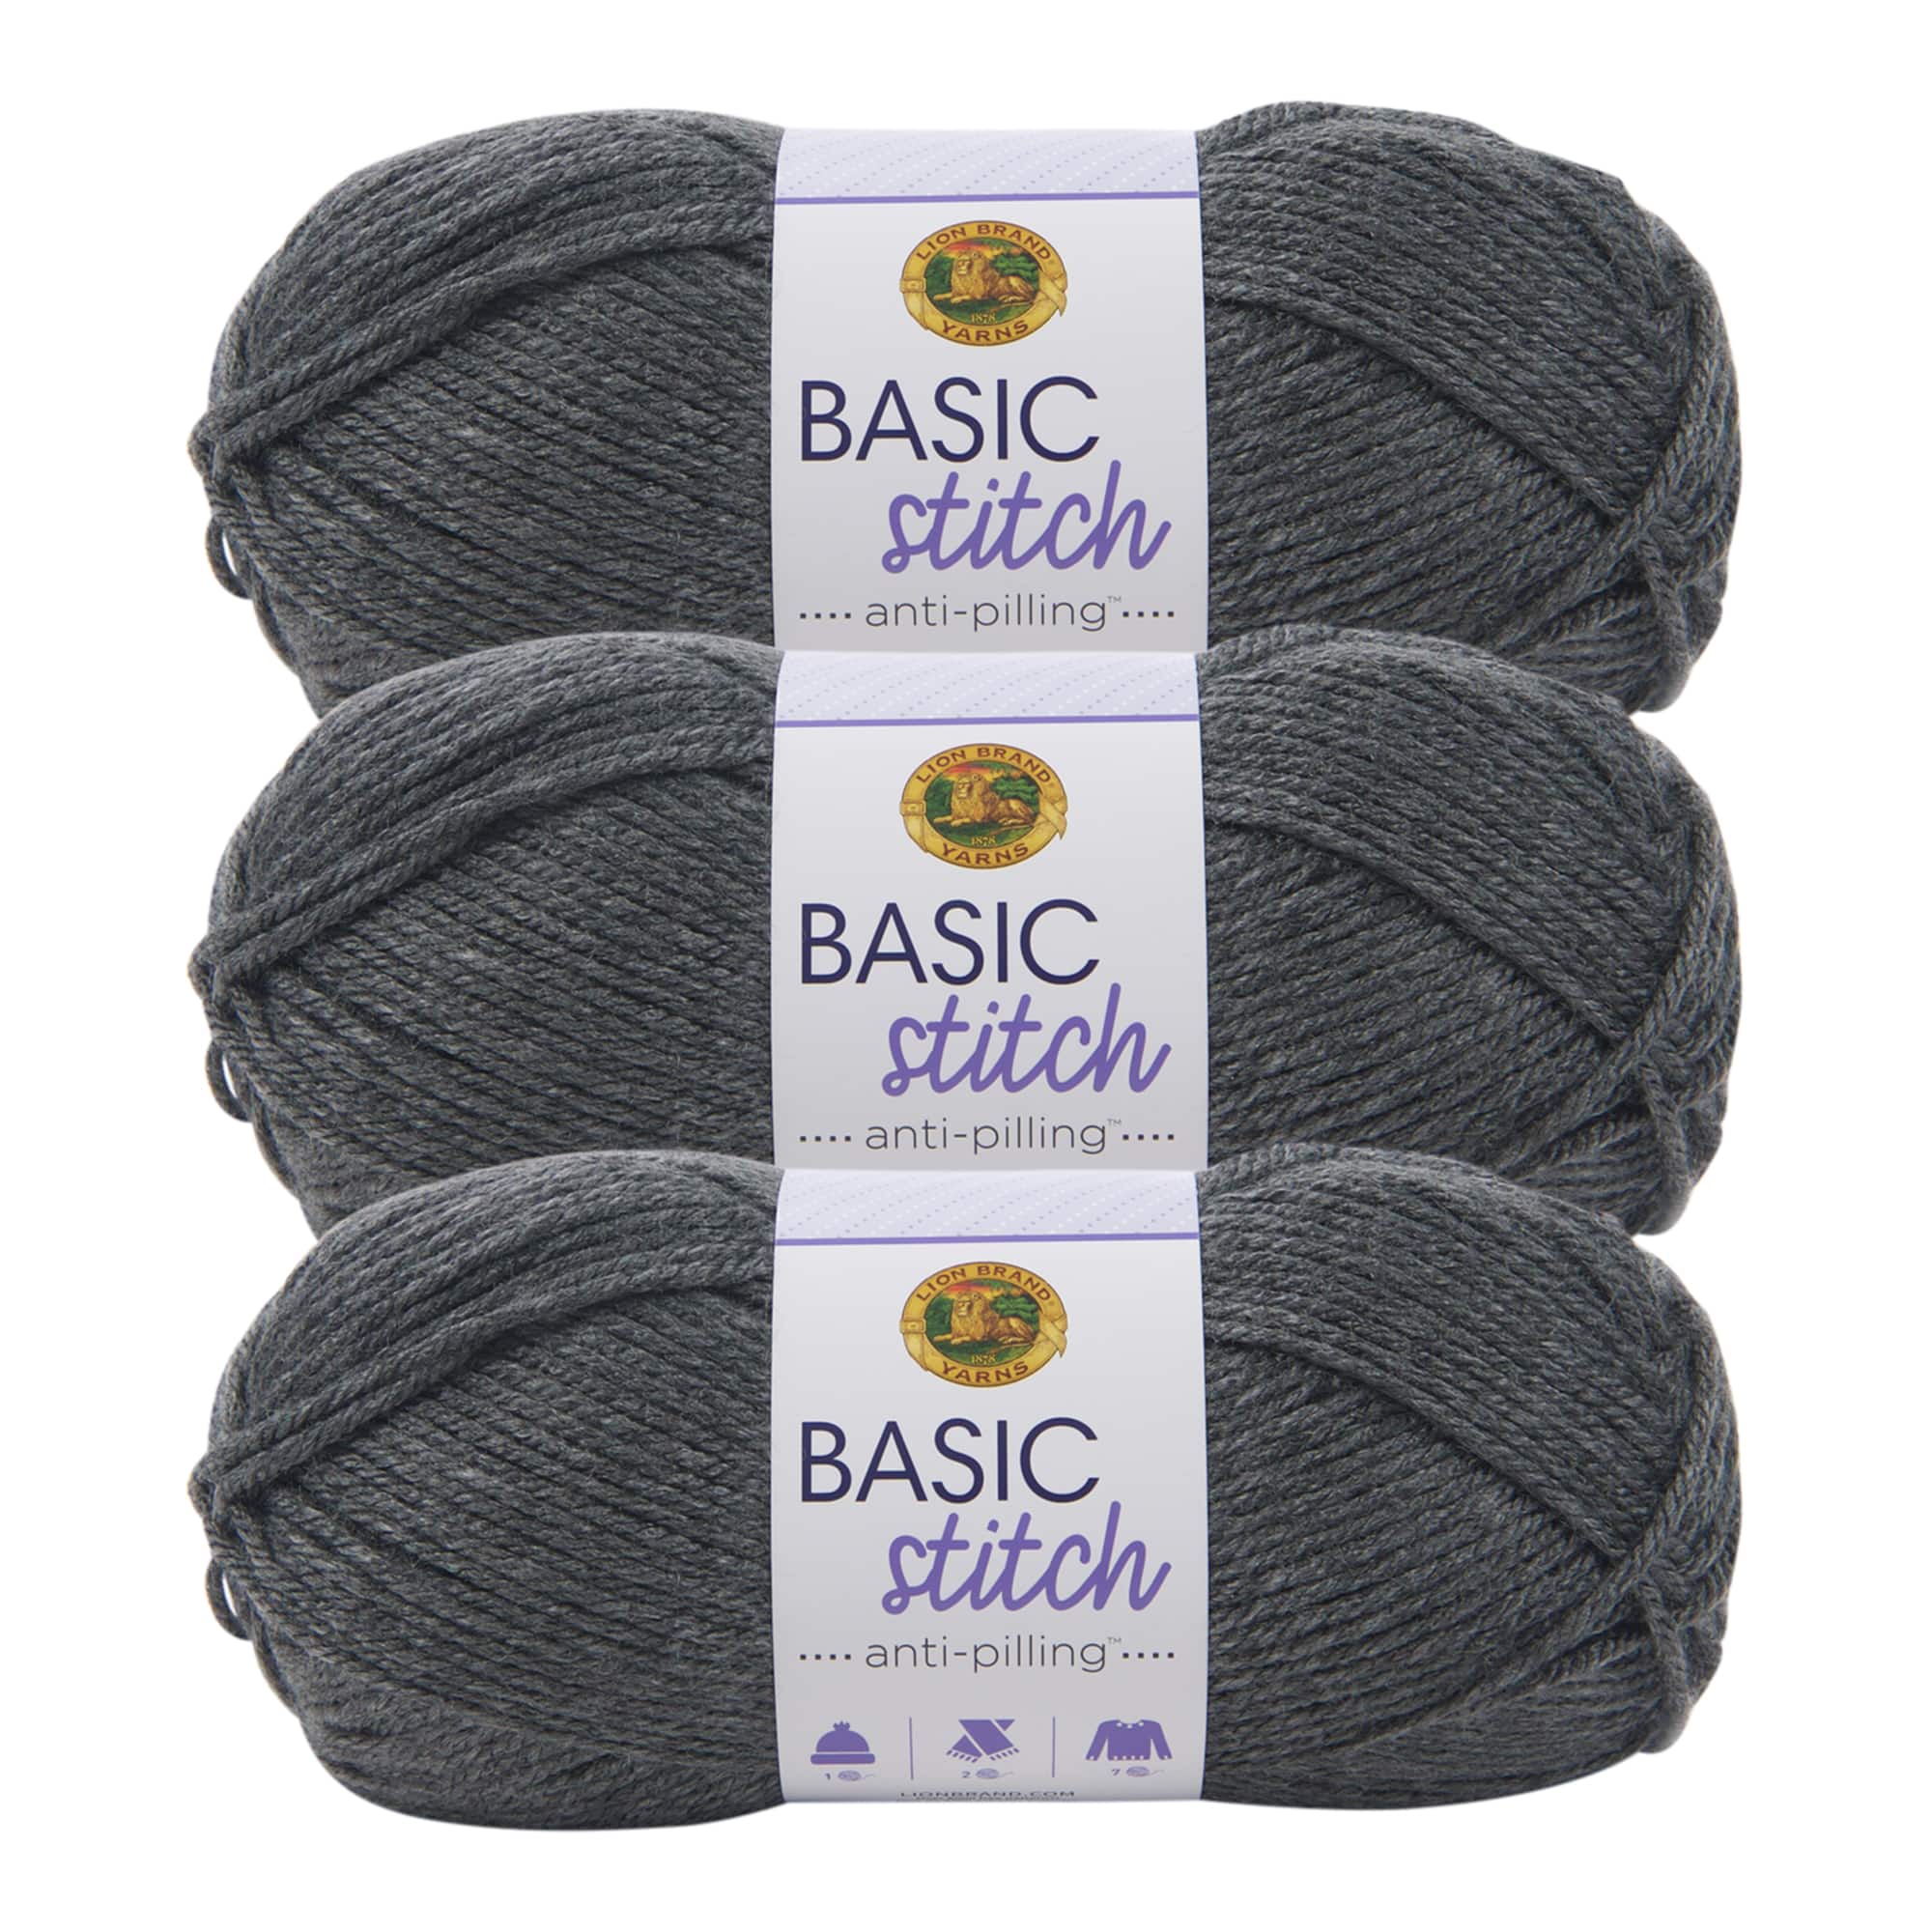 (3-pack) Lion Brand Yarn 202-121 Basic Stitch Anti Pilling Yarn, Almond - Tan